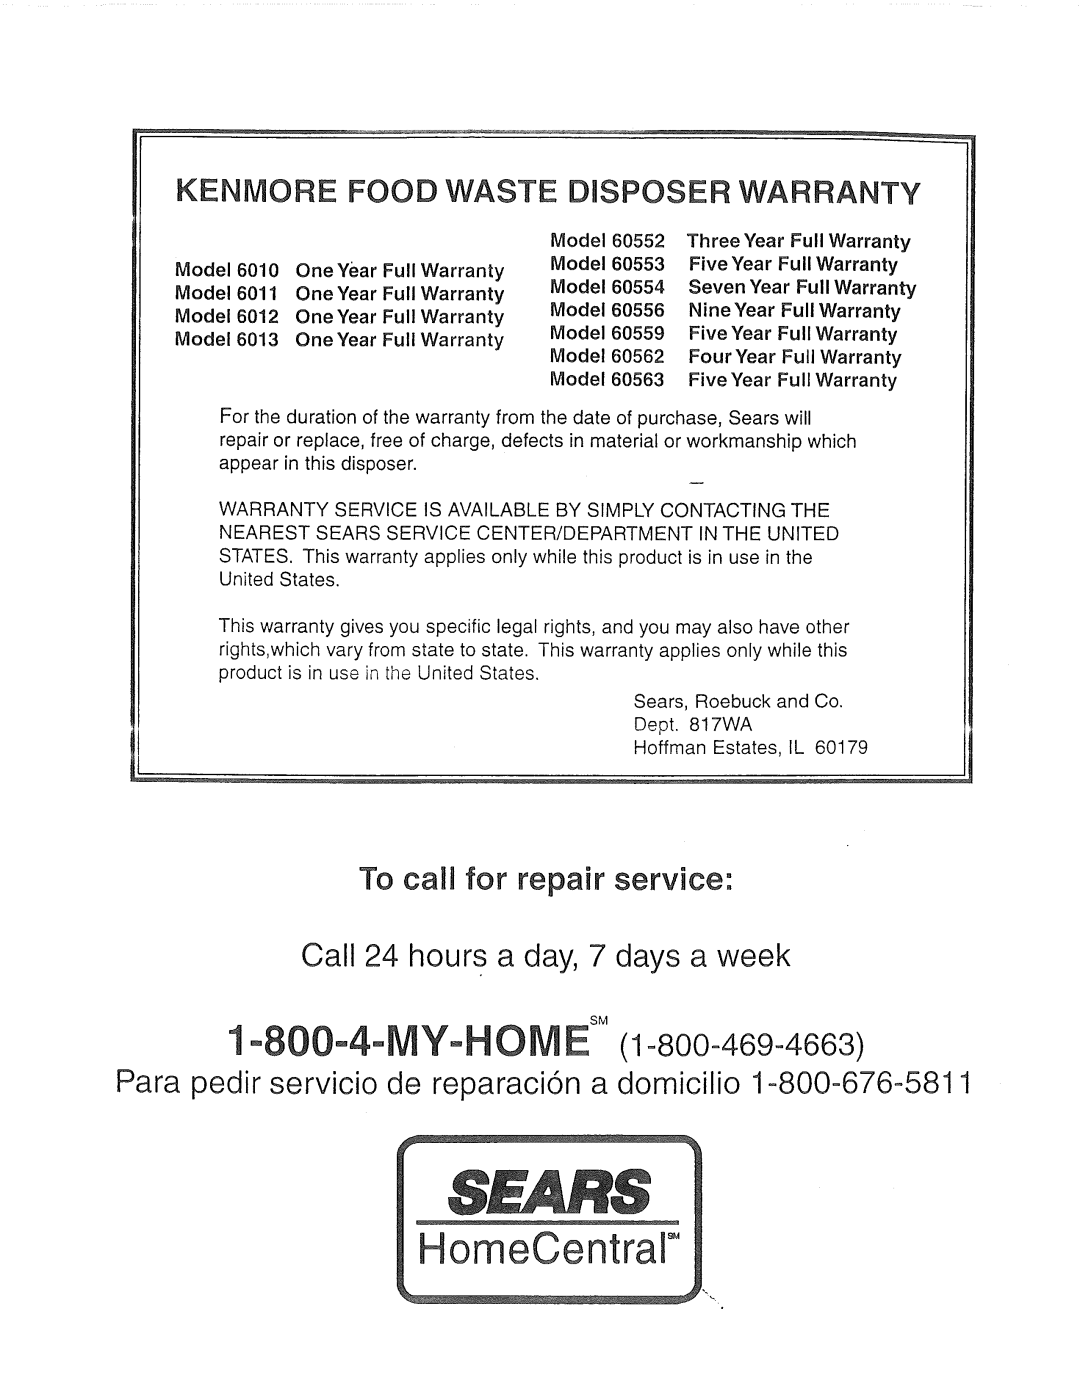 Kenmore 72785 manual Kenmore Food Waste Disposer Warranty, To calJ for repair service, Model, One Year, 60559, 60562, 60563 